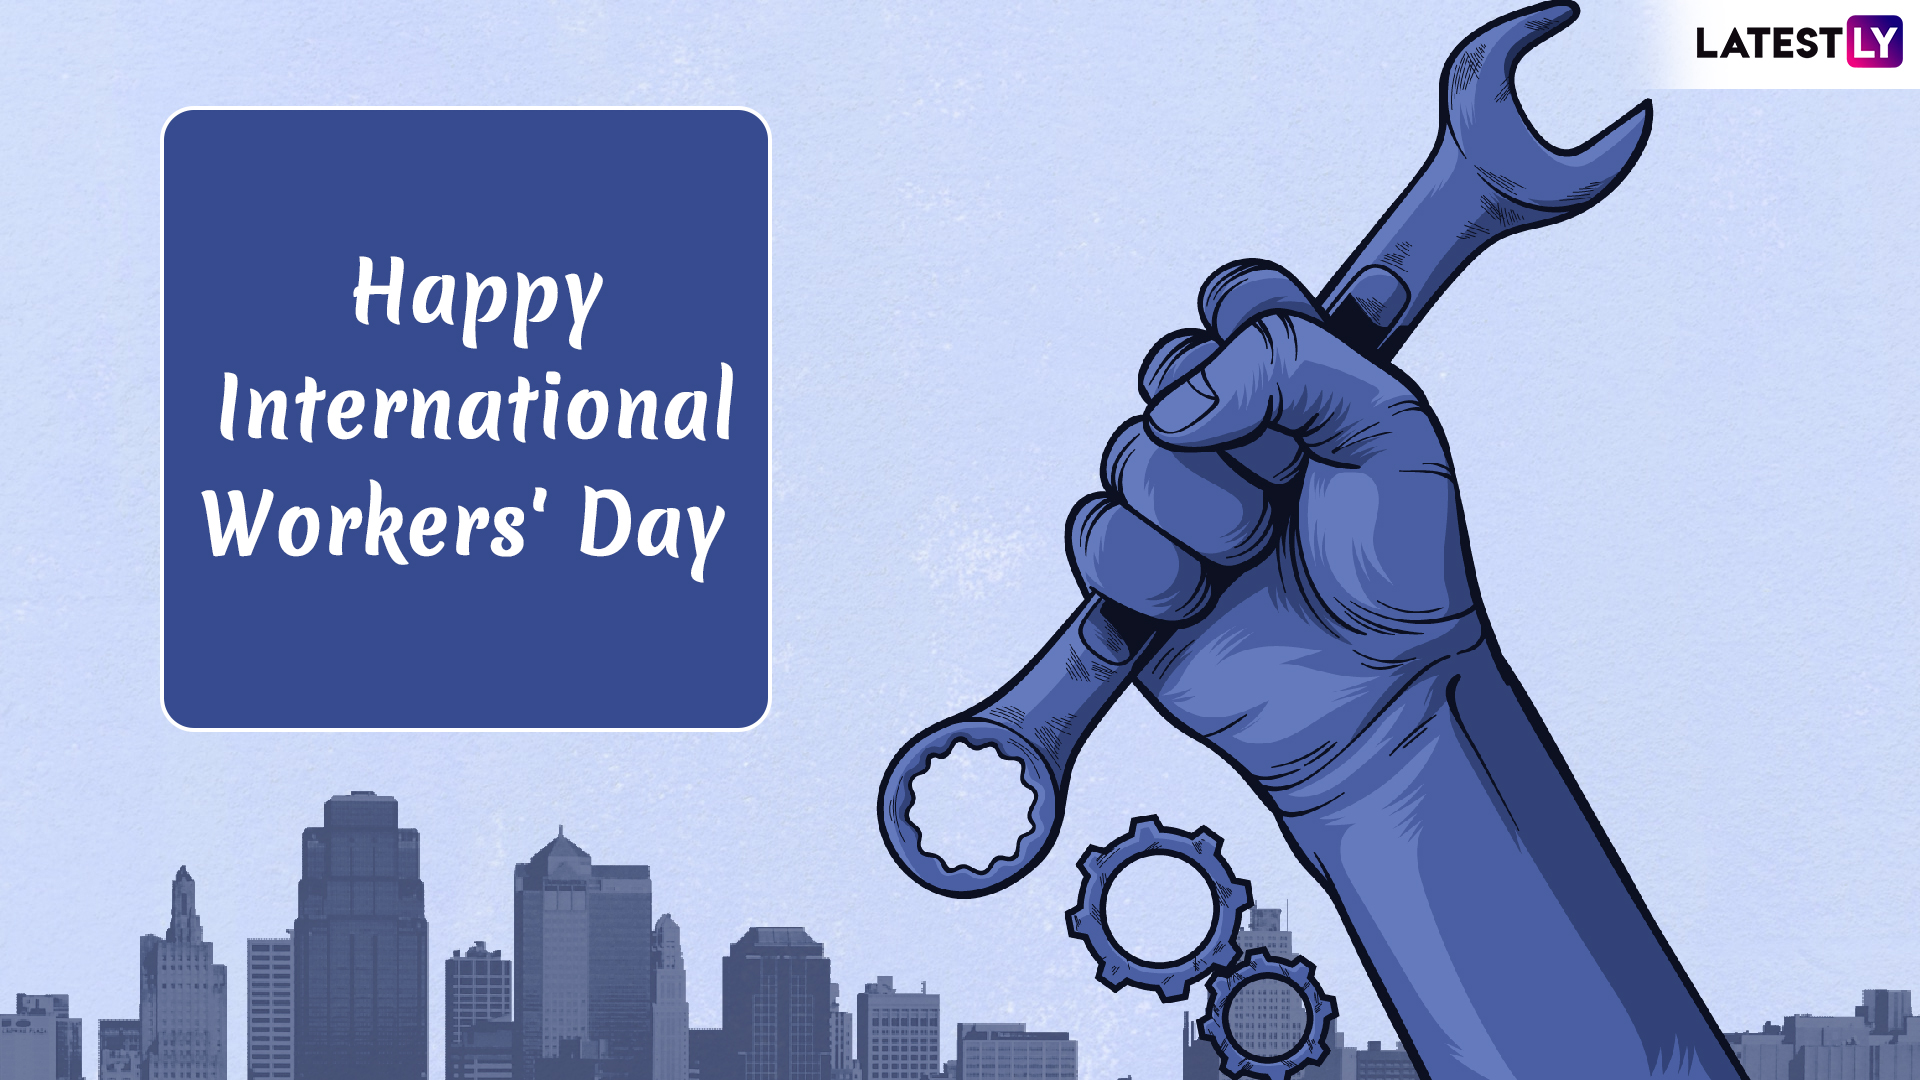 May working days. International Labor Day. International workers' Day. 1 May International workers' Day. Happy International workers Day.